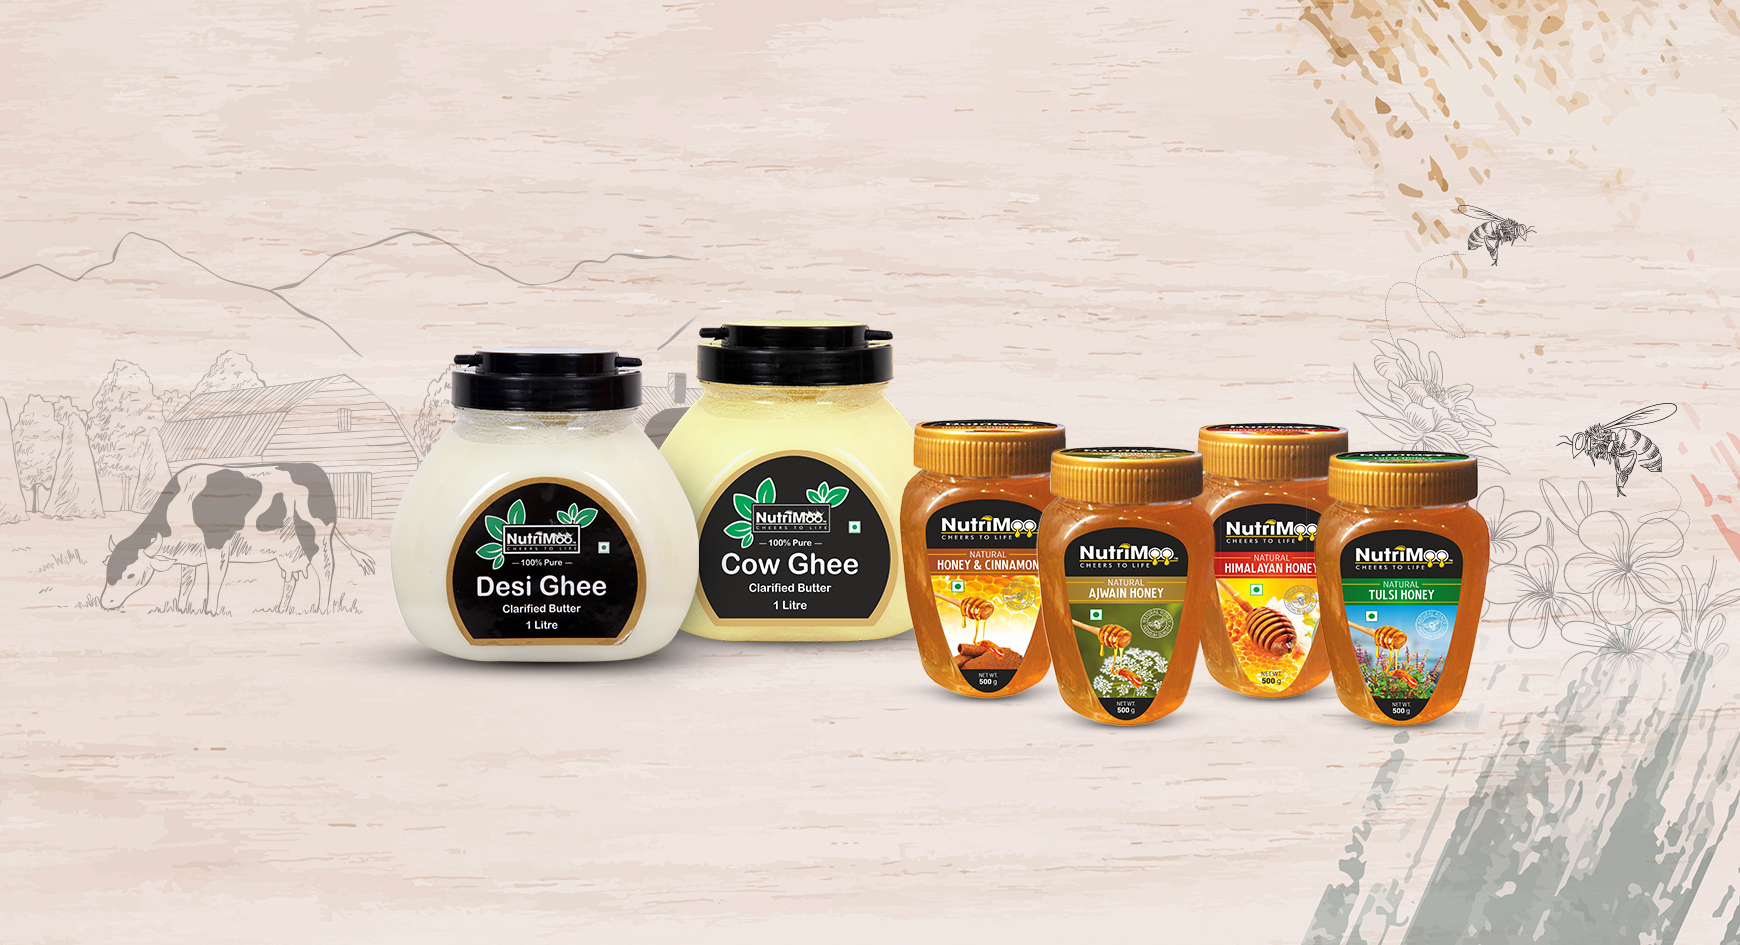 Nutrimoo Desi Ghee & Honey - A step towards purity and freshness